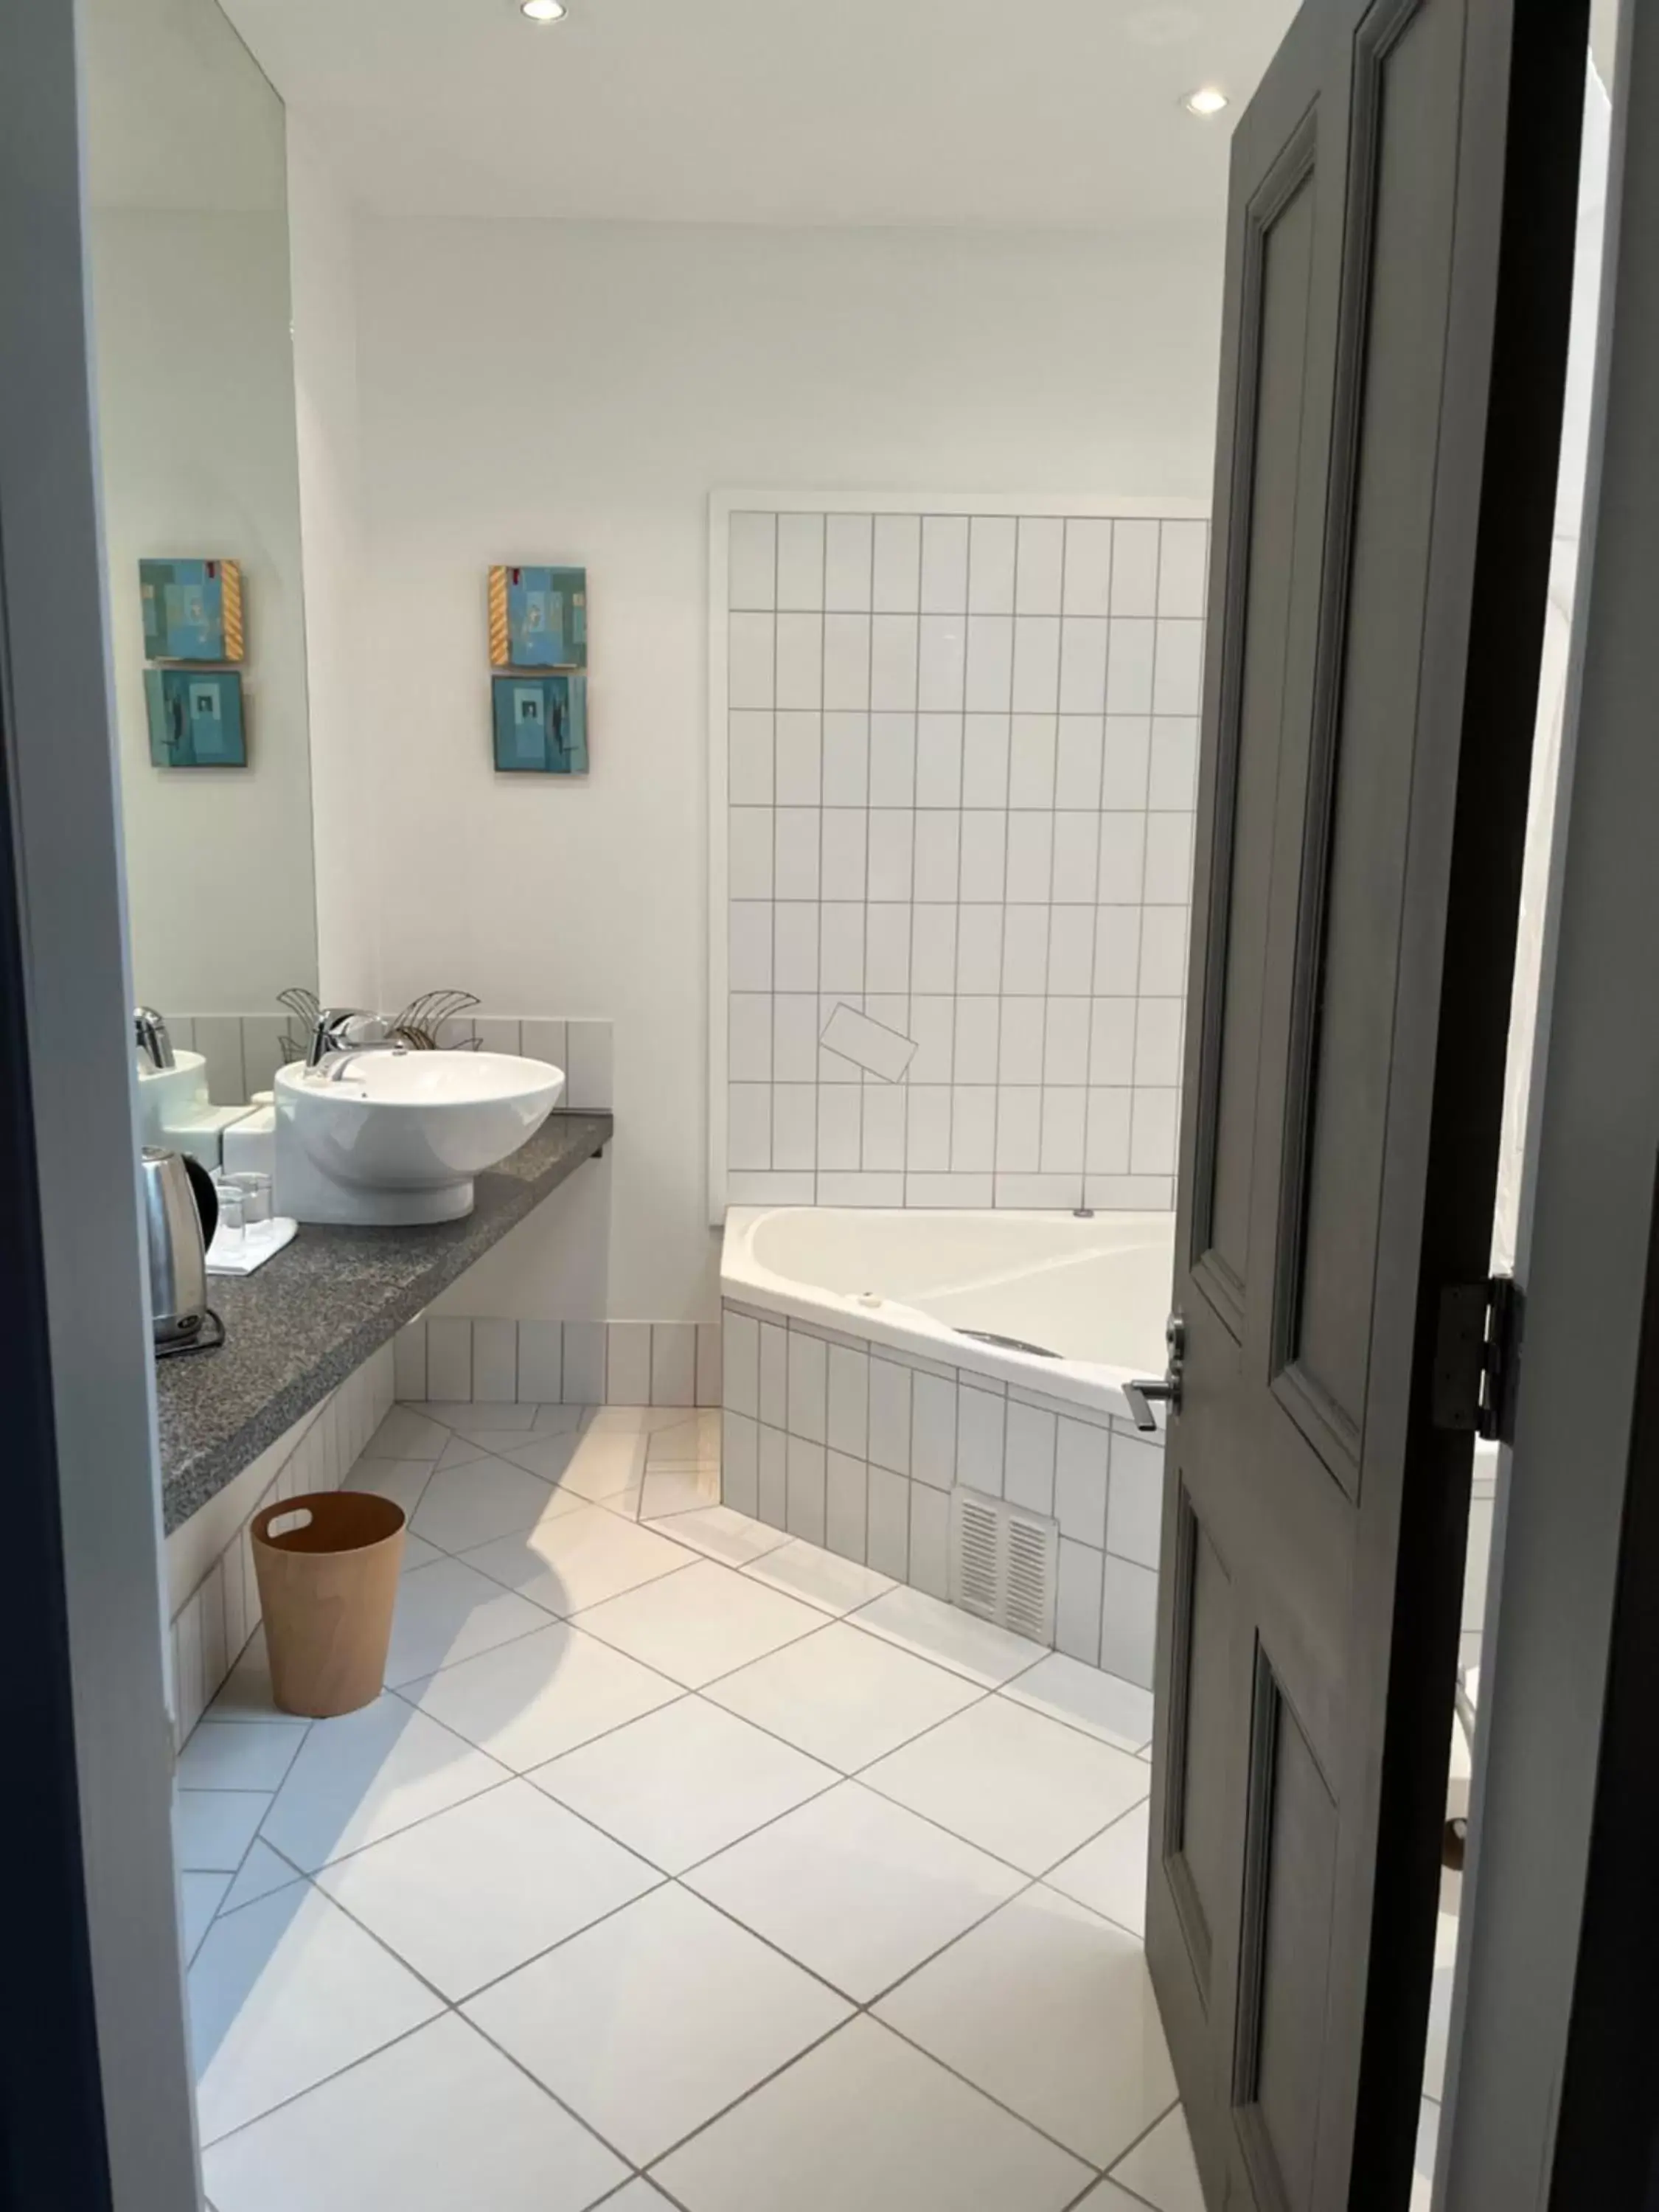 Bathroom in Nice Hotel